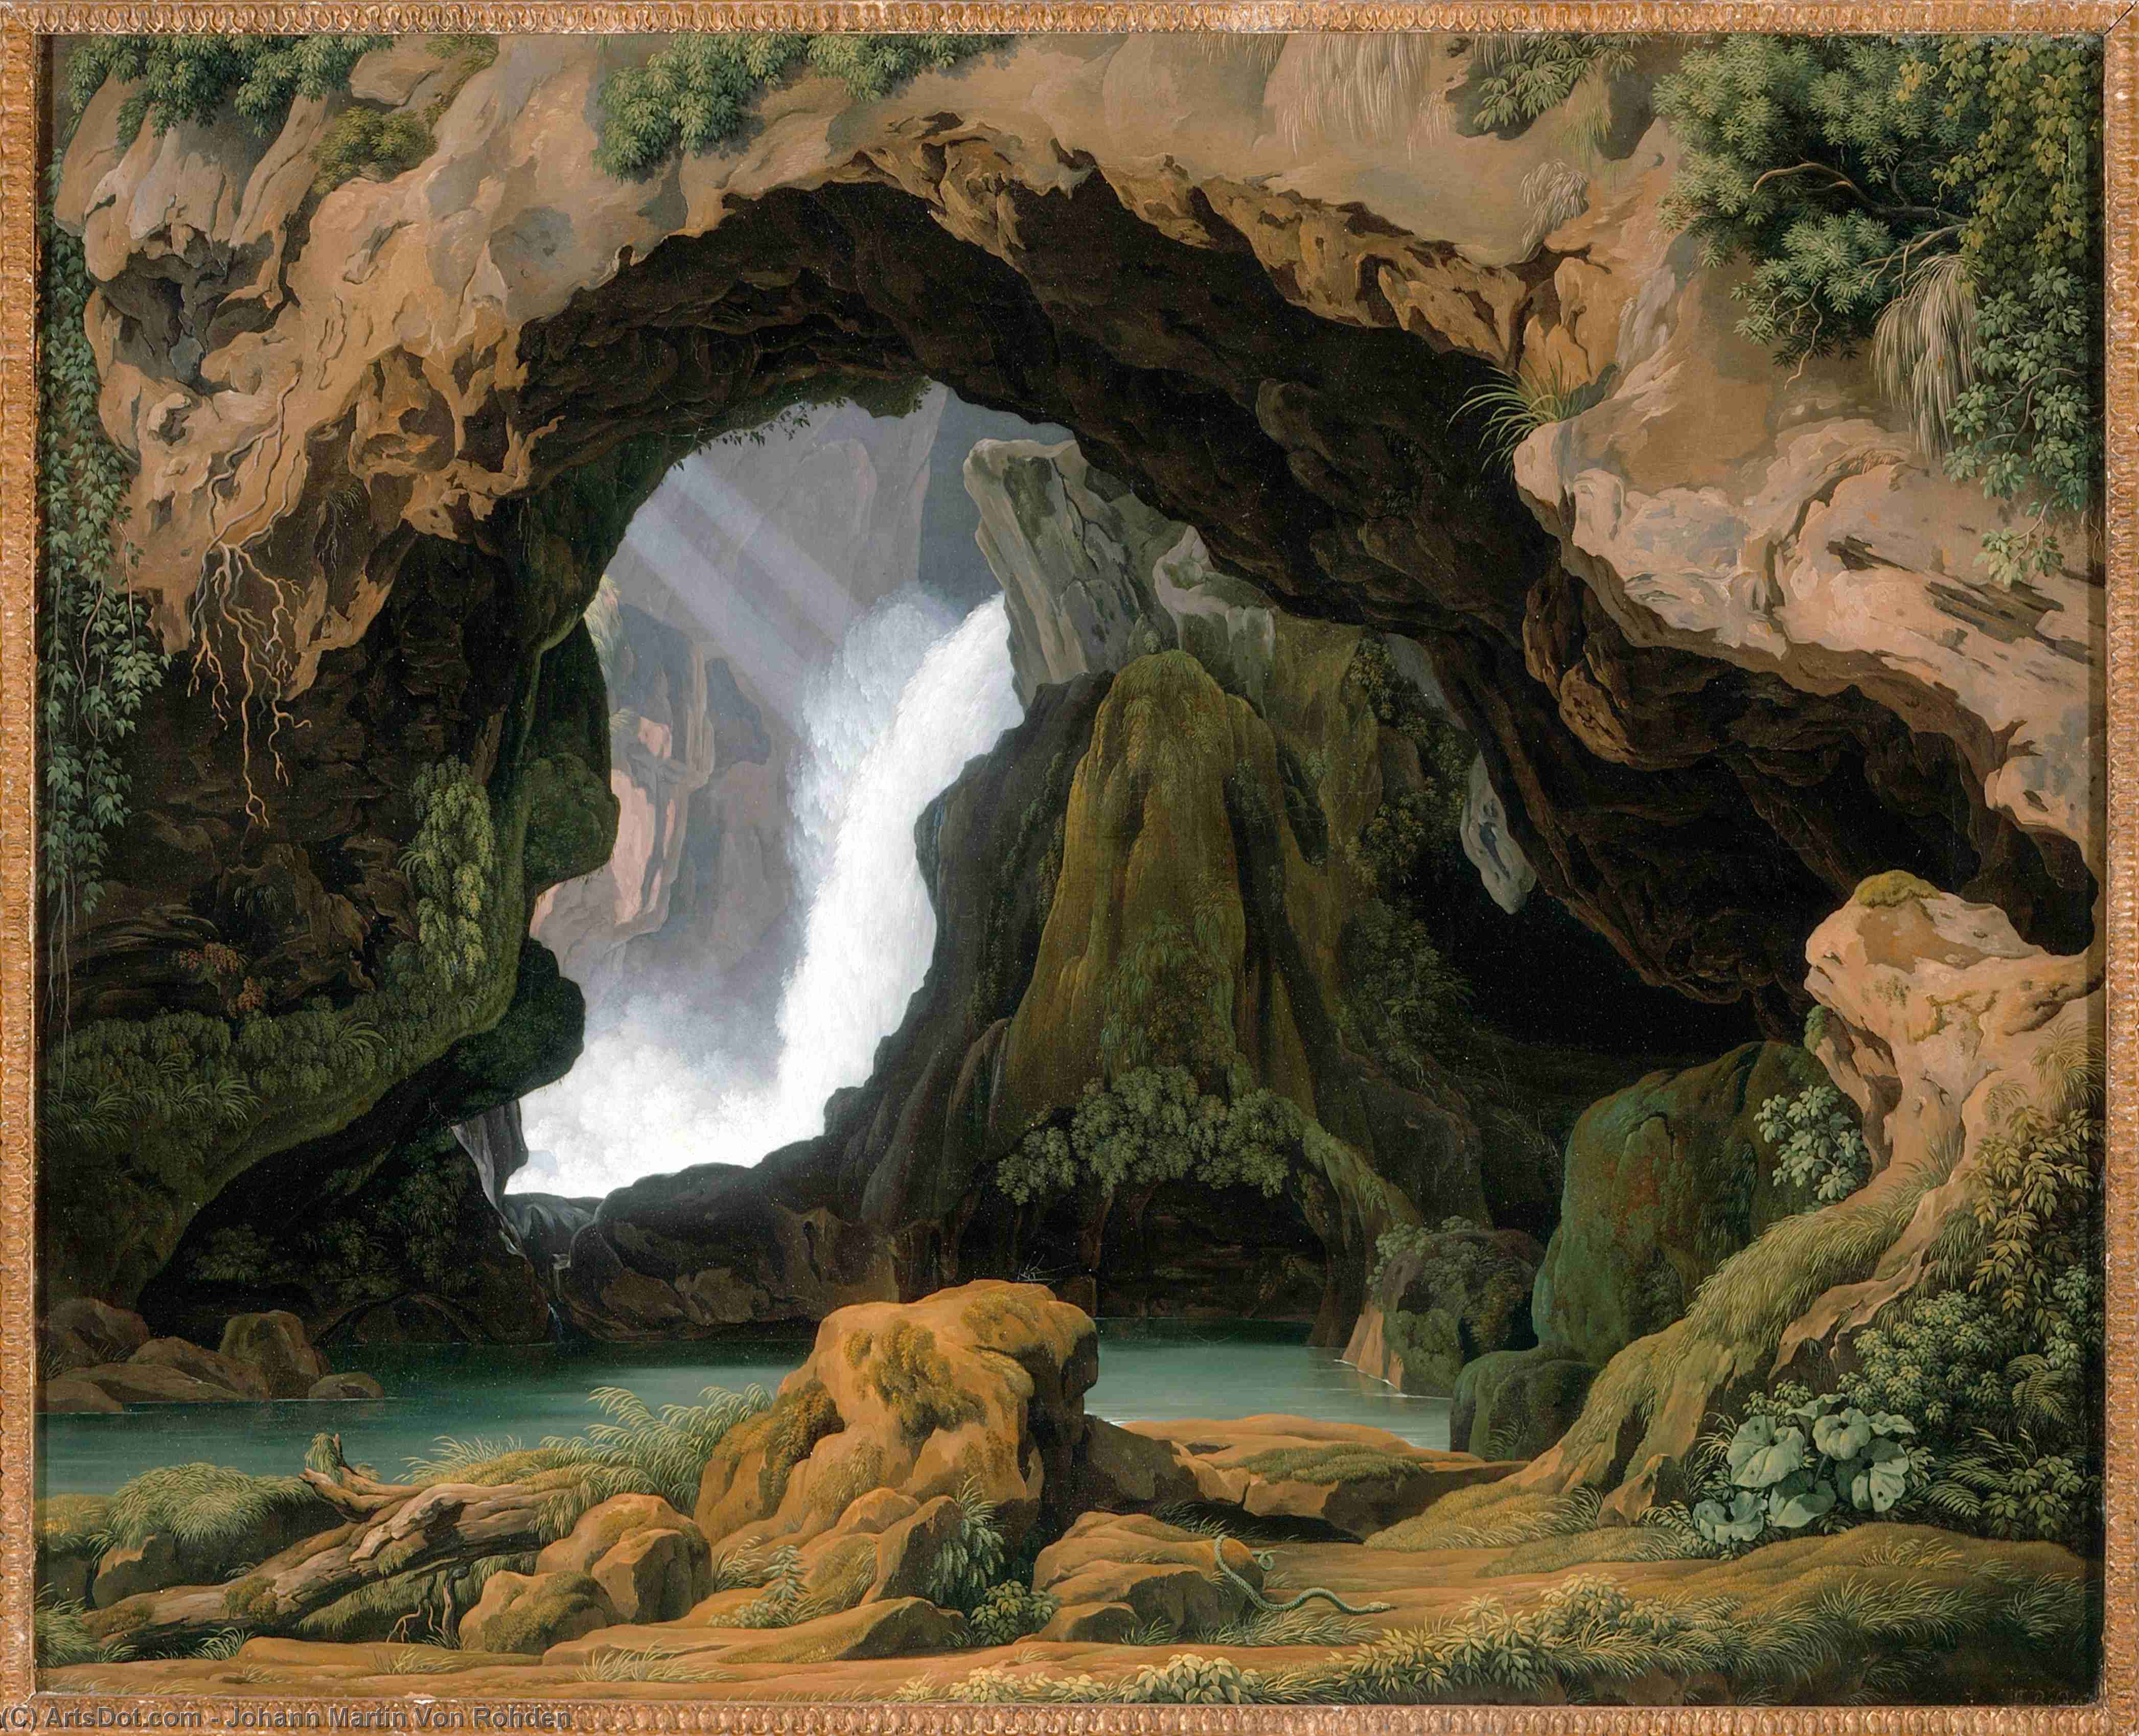 Buy Museum Art Reproductions The Grotto of Neptune in Tivoli by Johann Martin Von Rohden (1778-1868) | ArtsDot.com